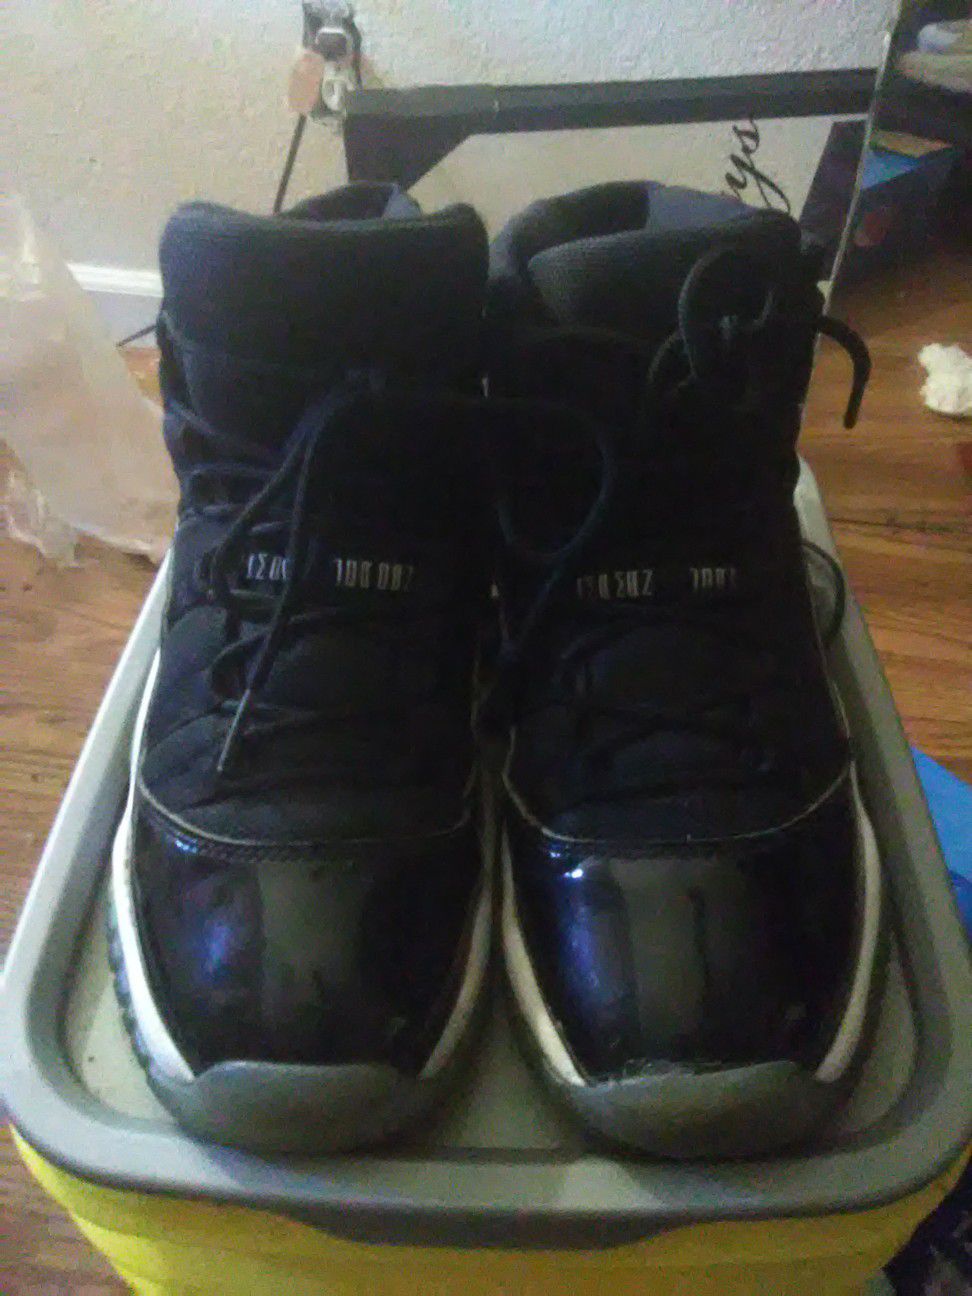 A pair of Jordans size 10' good condition